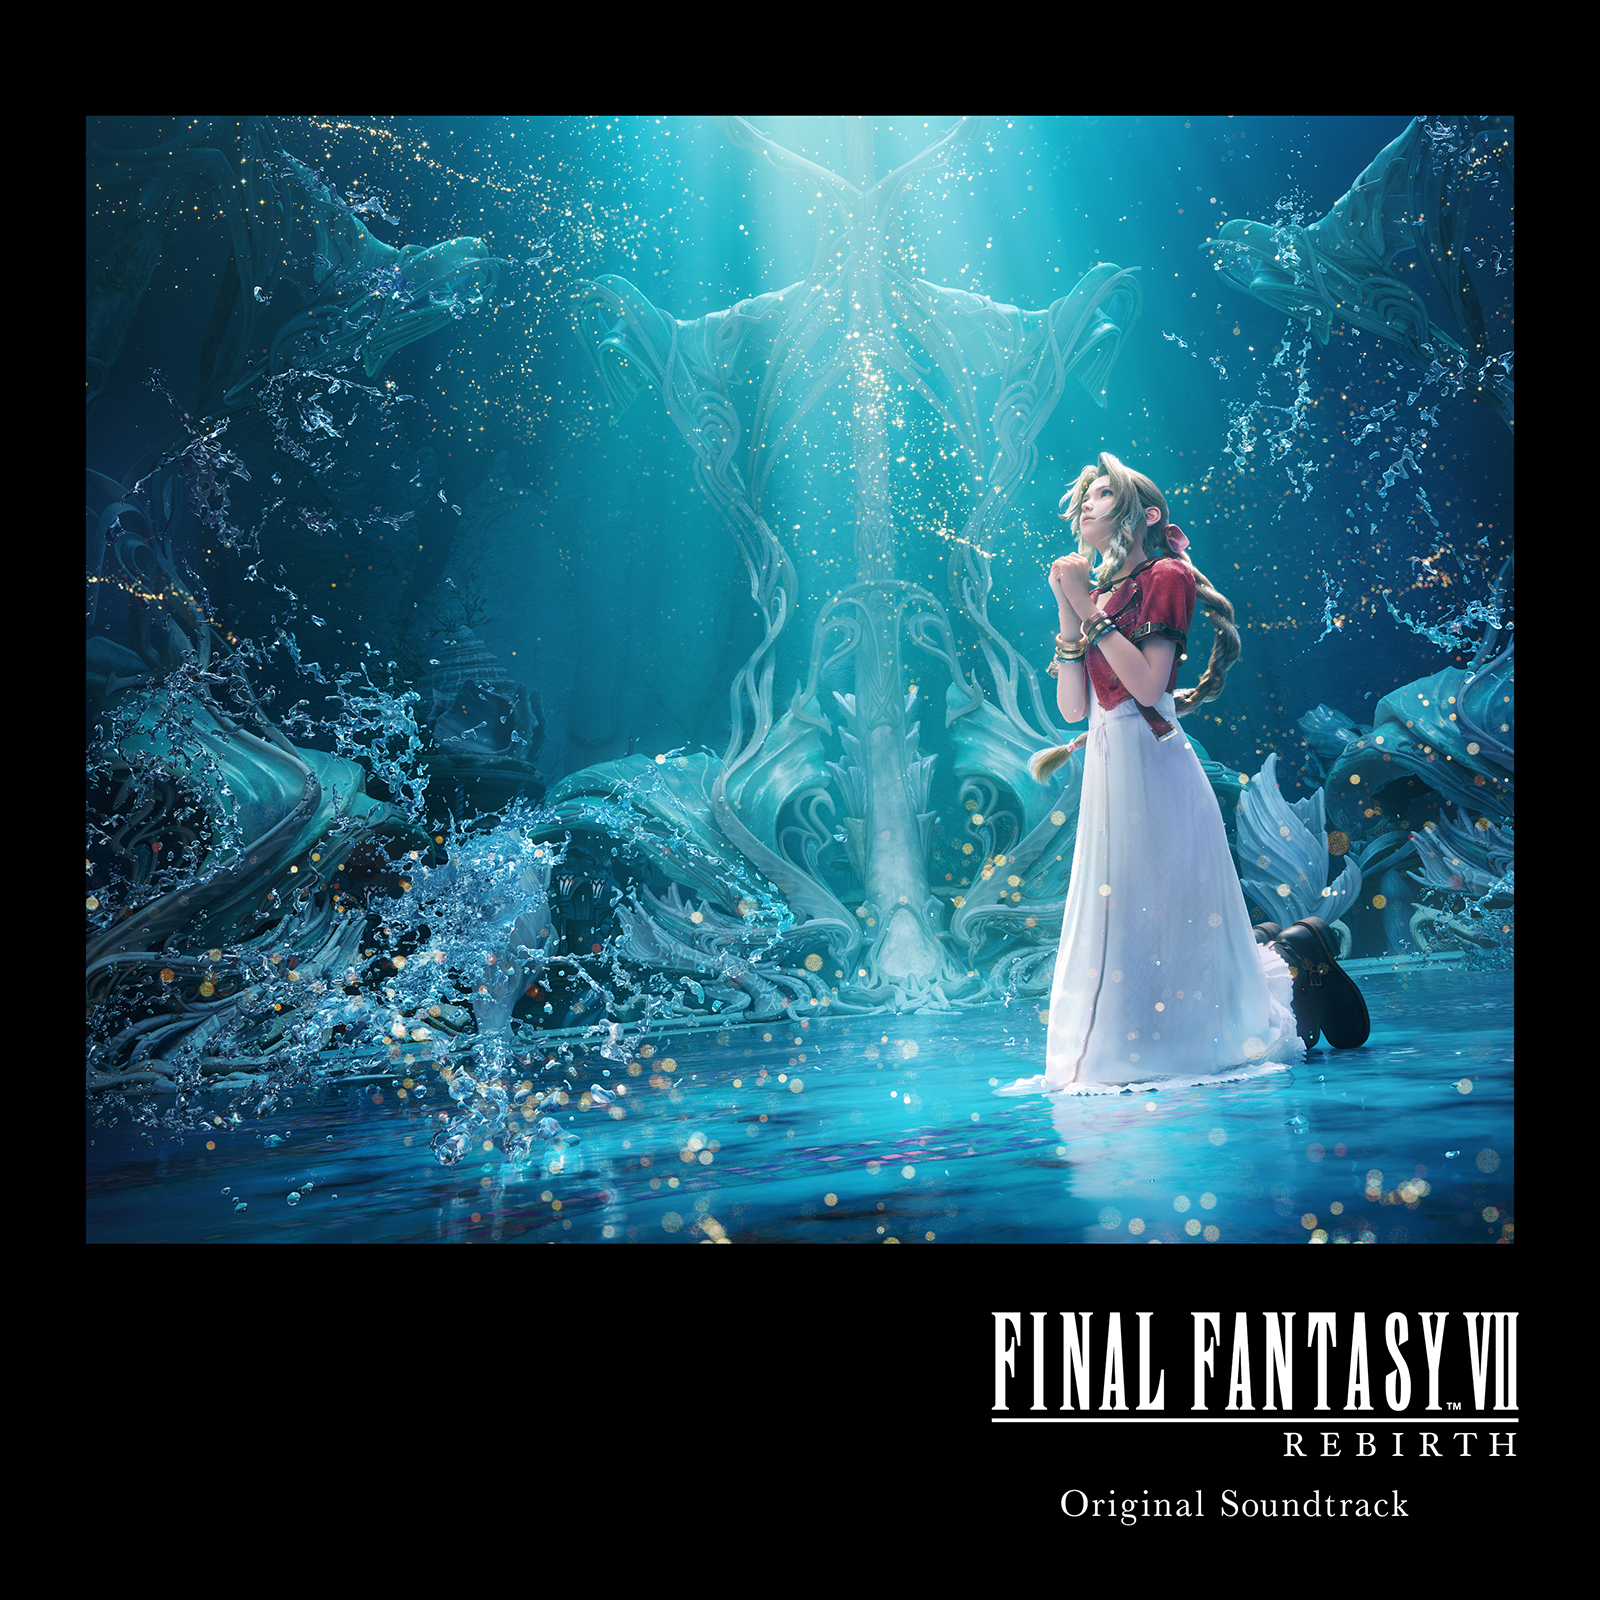 FINAL FANTASY VII REBIRTH Original Soundtrack -- Seeders: 9 -- Leechers: 0